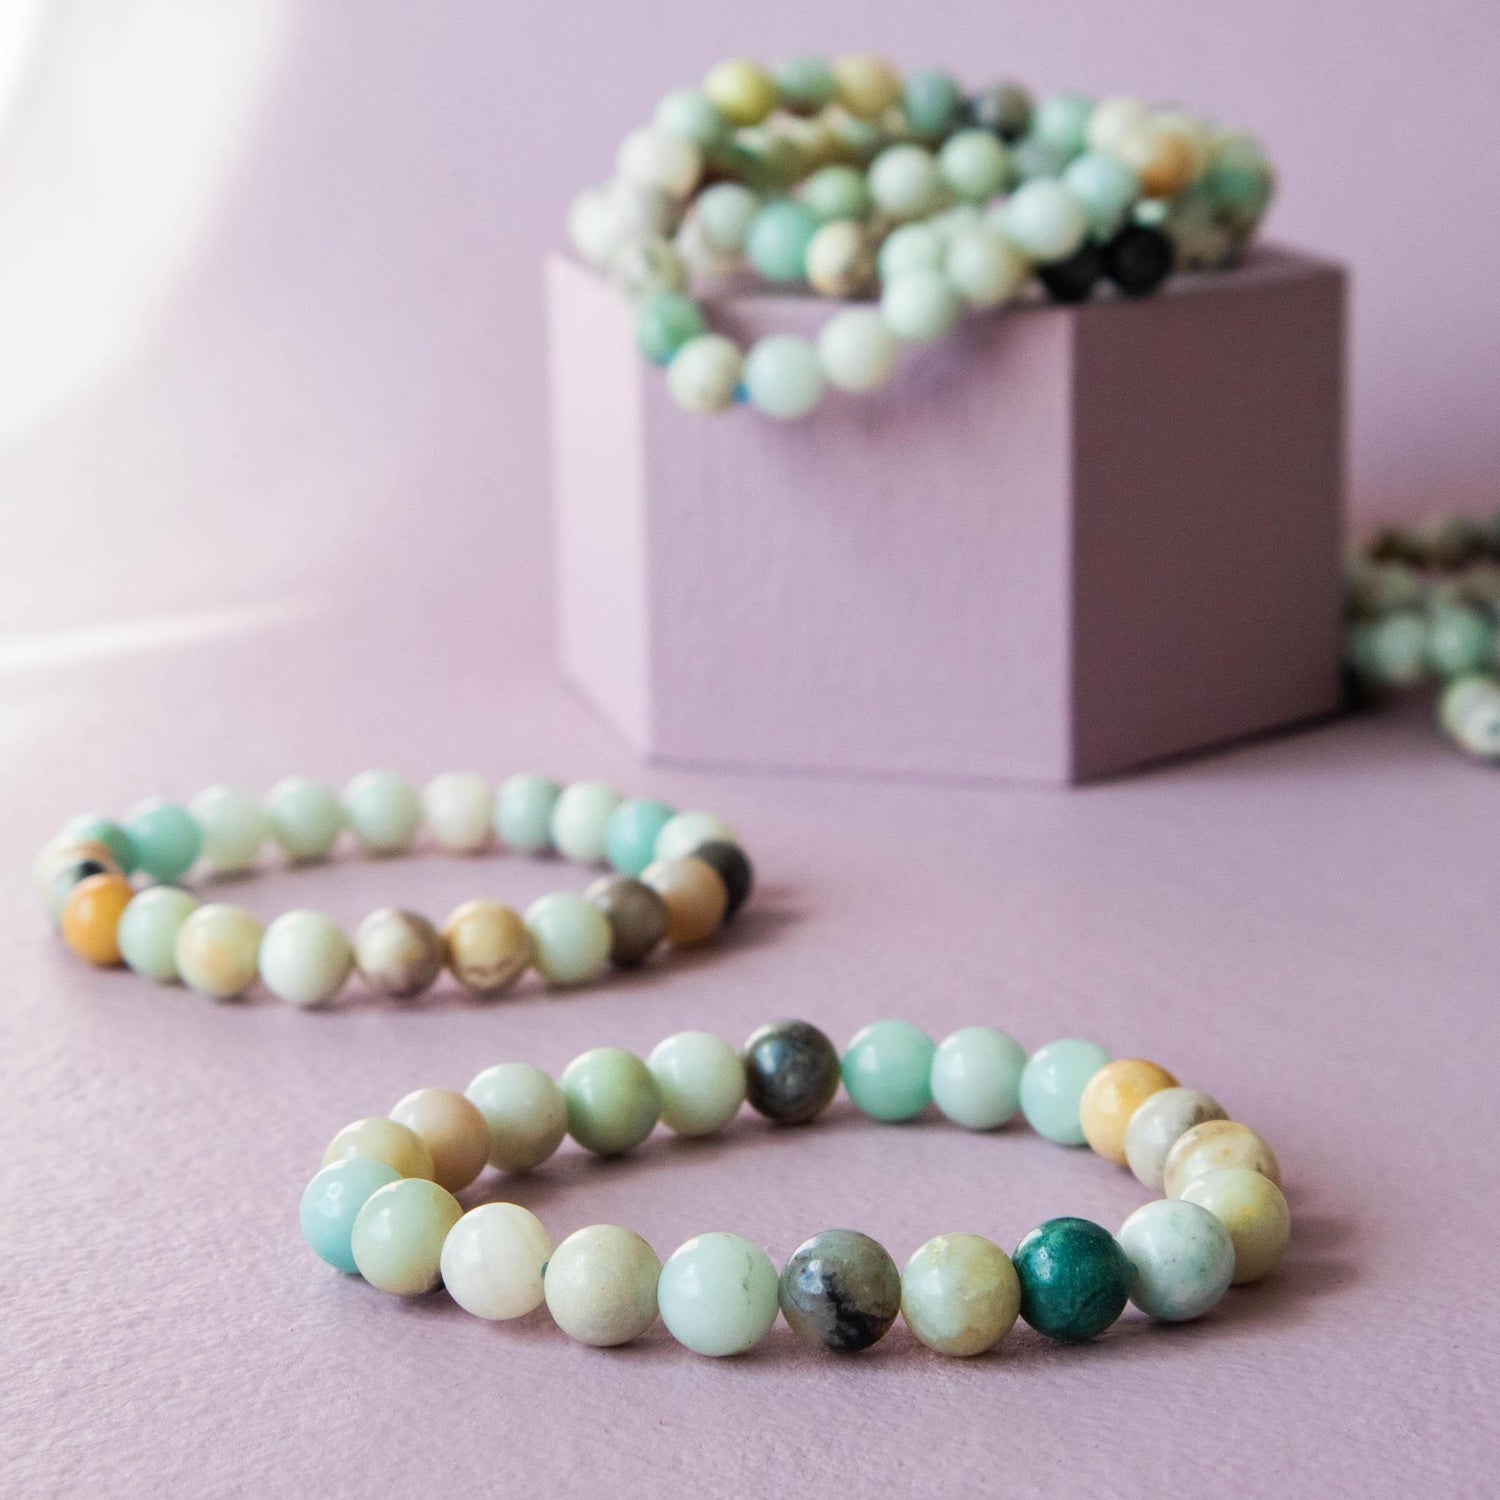 Healing Bracelets for Men – What Do Gemstones Mean